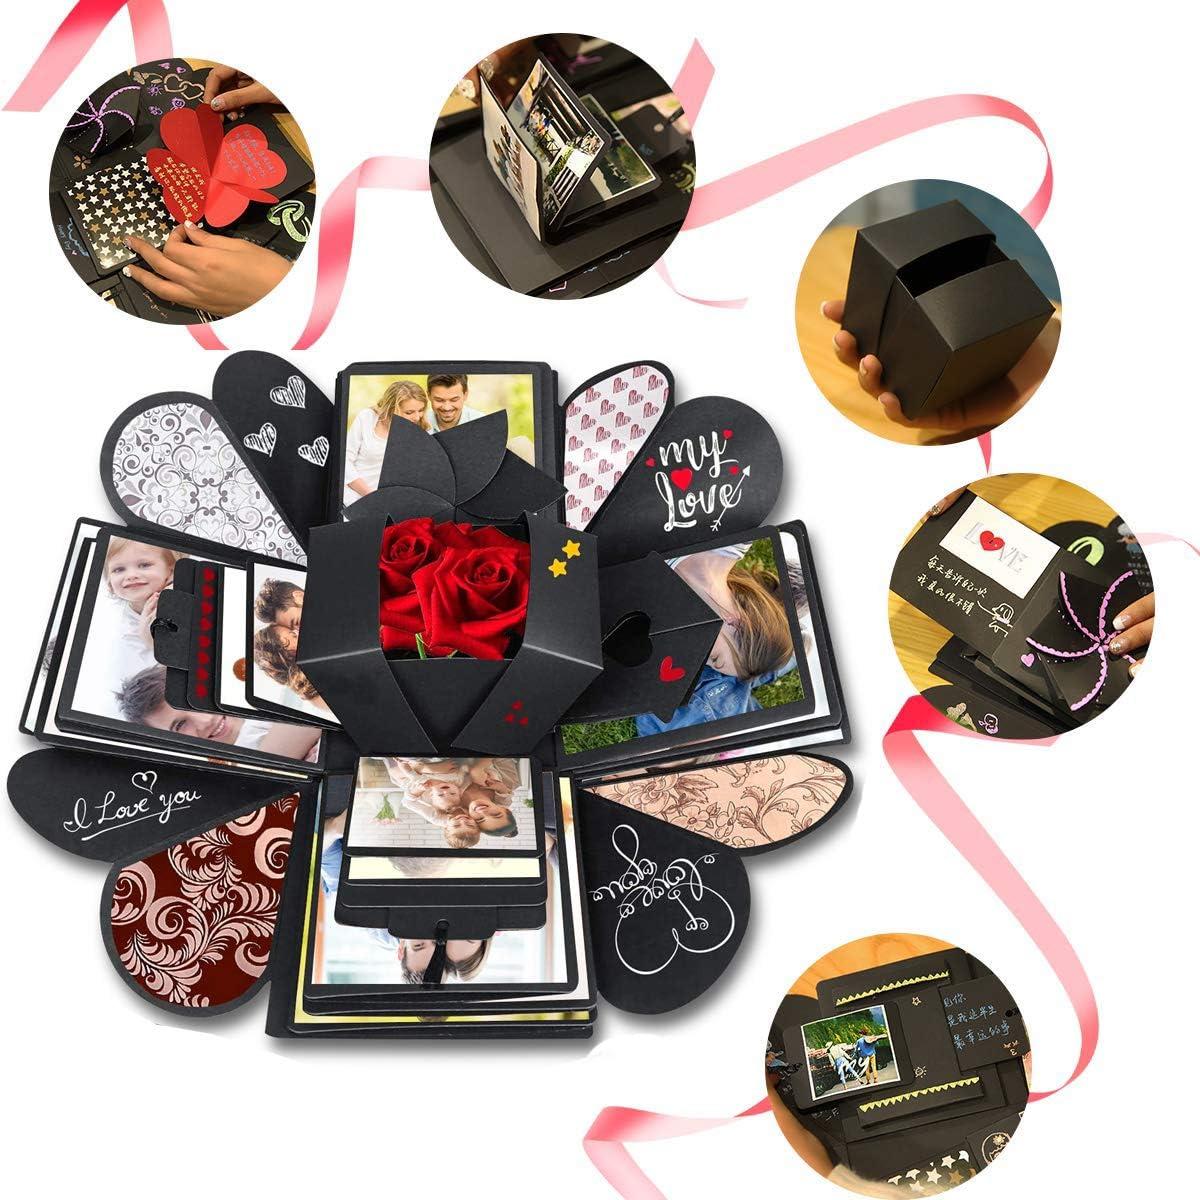 Wanateber Explosion Box DIY Gift - Love Memory Scrapbook Photo Box for  Birthday Gift Anniversary Wedding or Valentine's Day Surprise Box (Black)